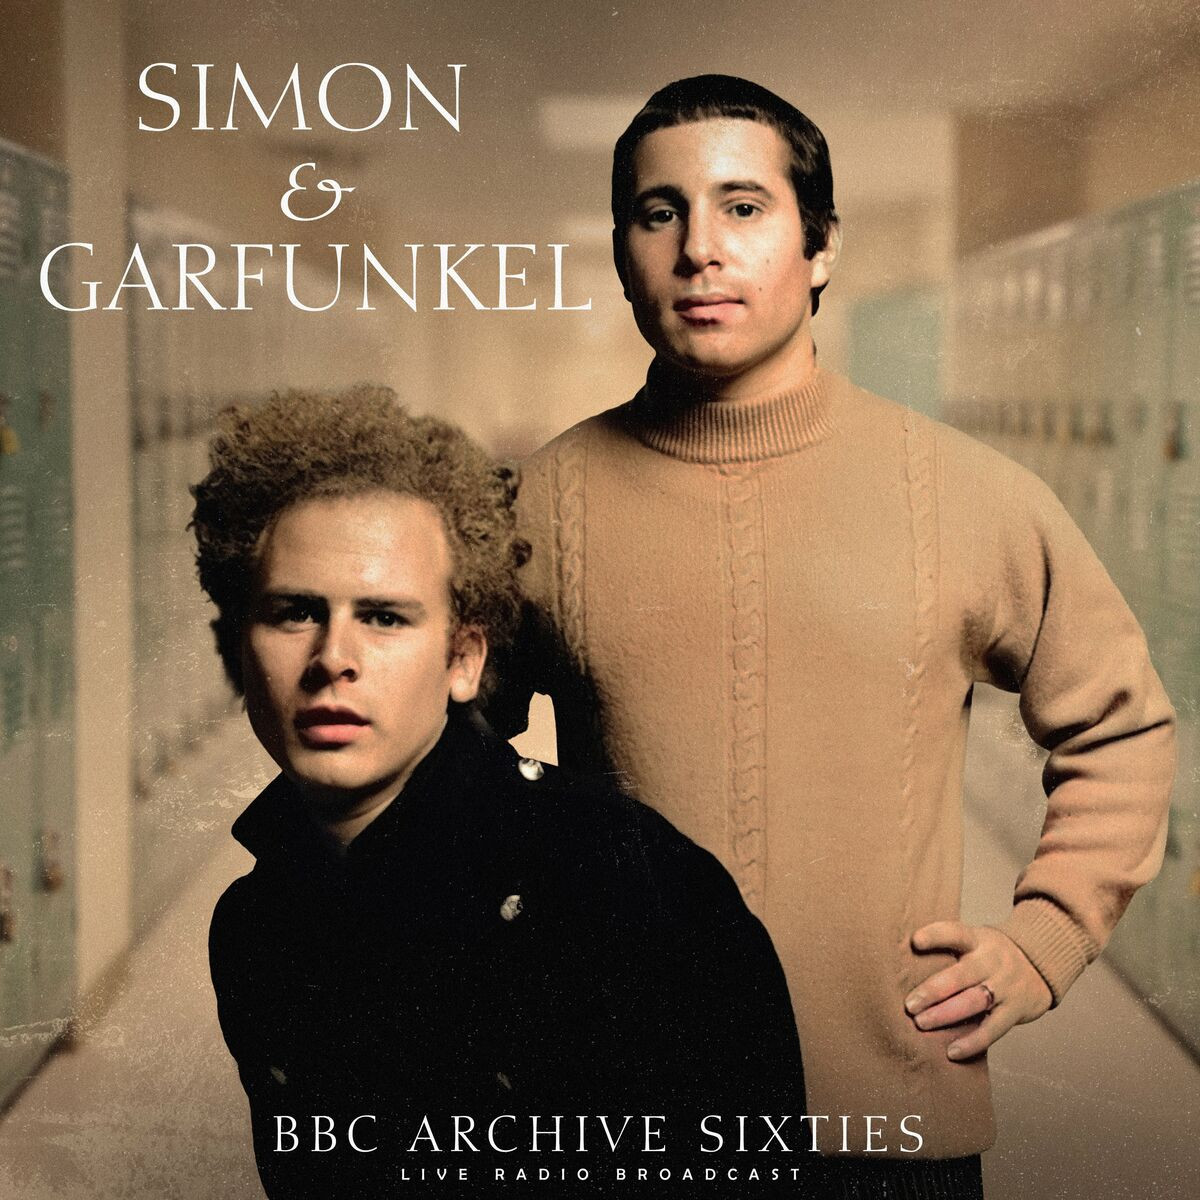 Simon & Garfunkel – BBC archives sixties (live) (2022) FLAC